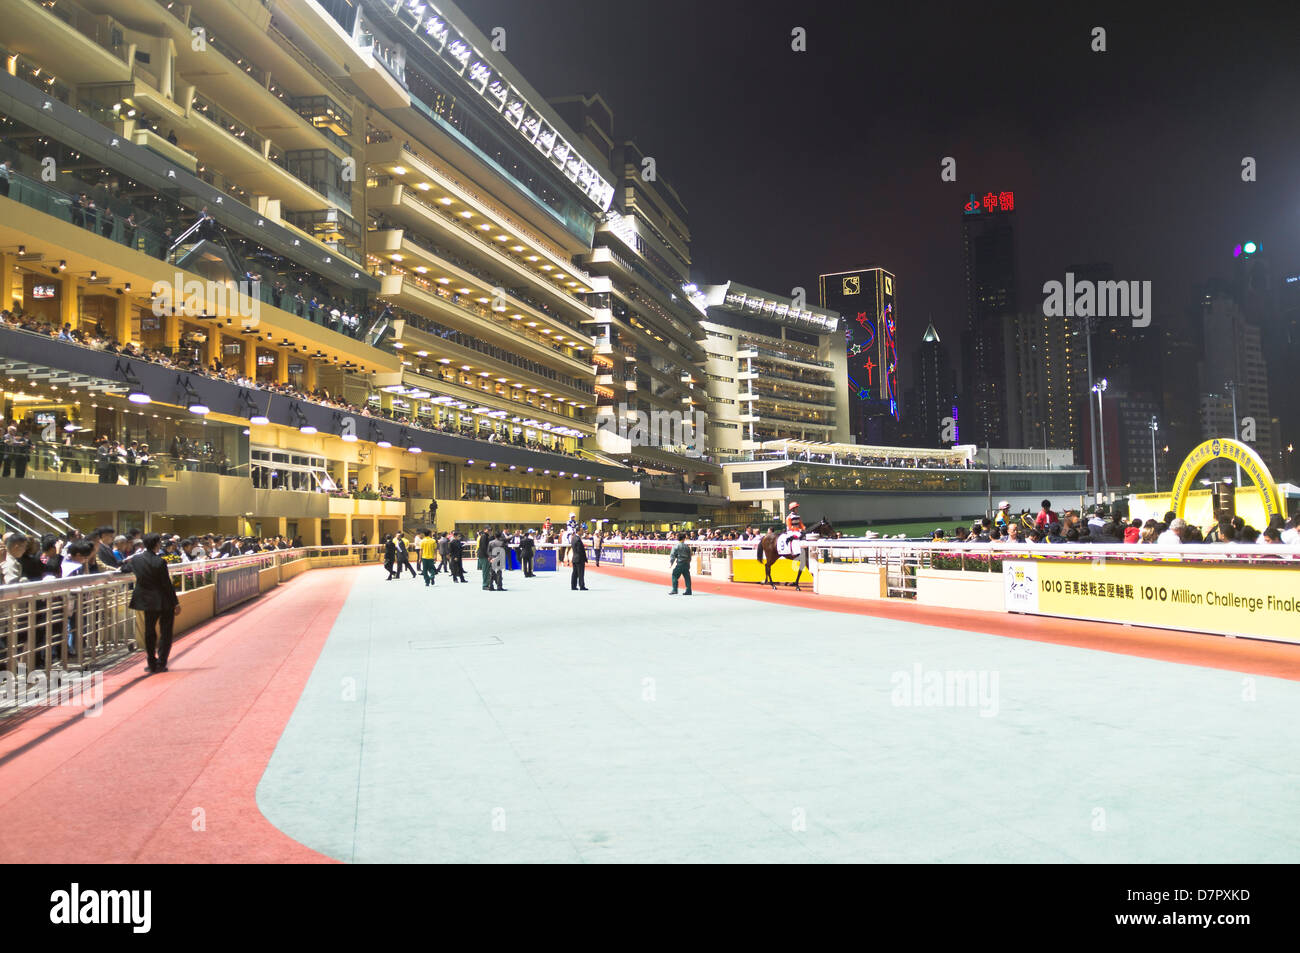 dh Happy Valley racecourse CAUSEWAY BAY HONG KONG Hong Kong racecourse stadium night race meeting Stock Photo